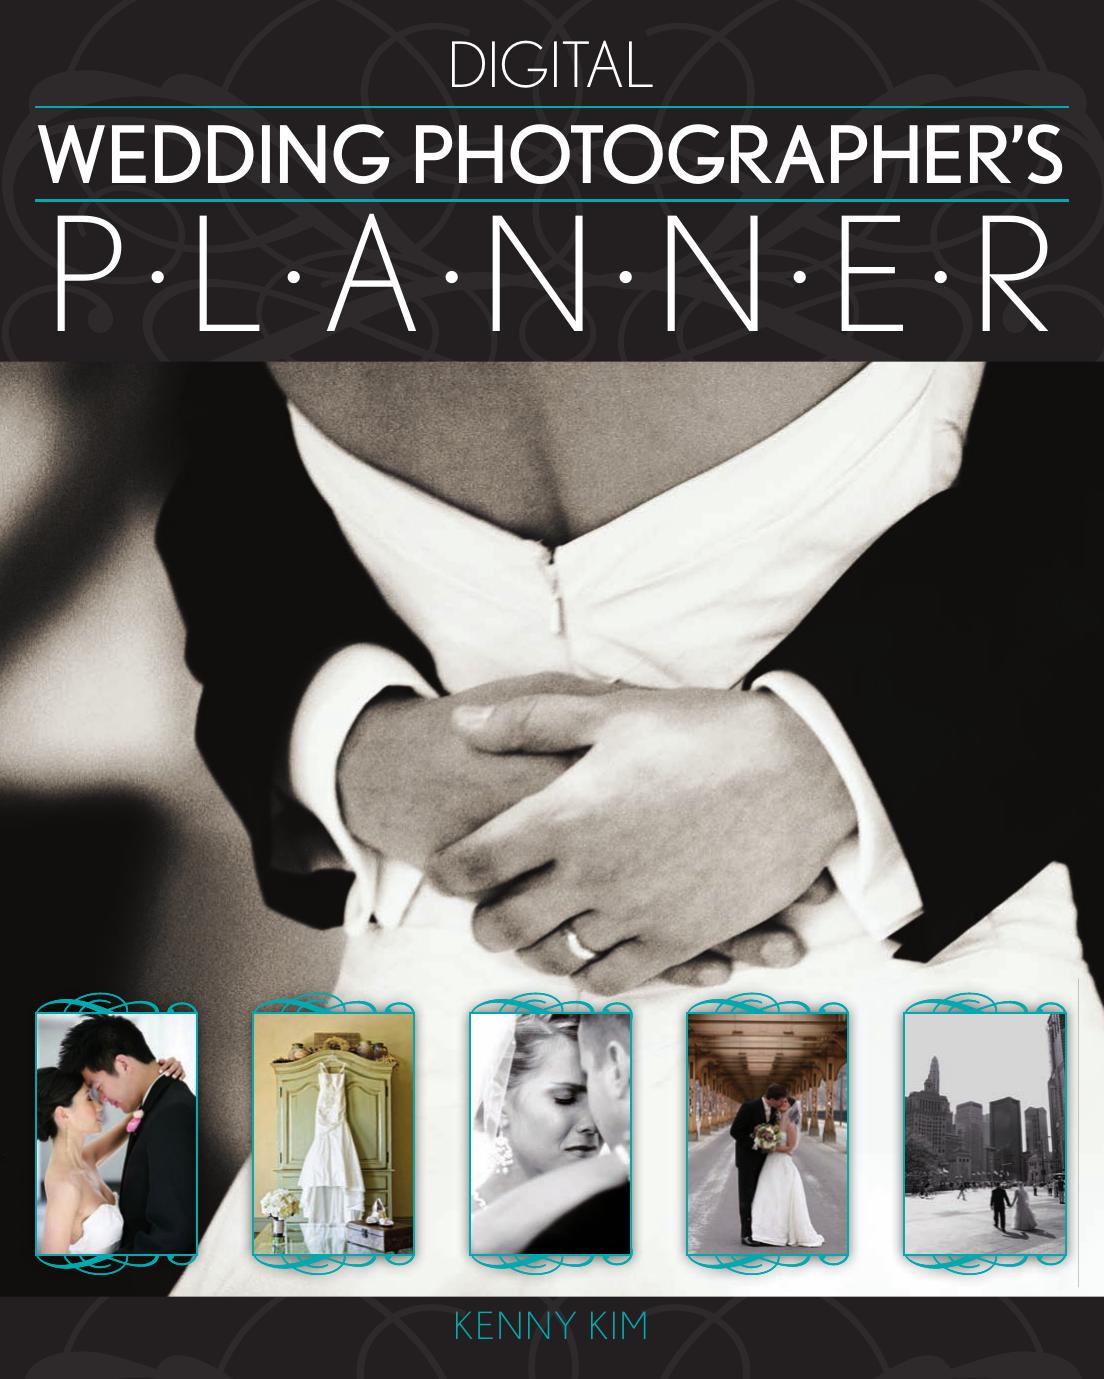 Digital Wedding Photographer's Planner by Kenny Kim